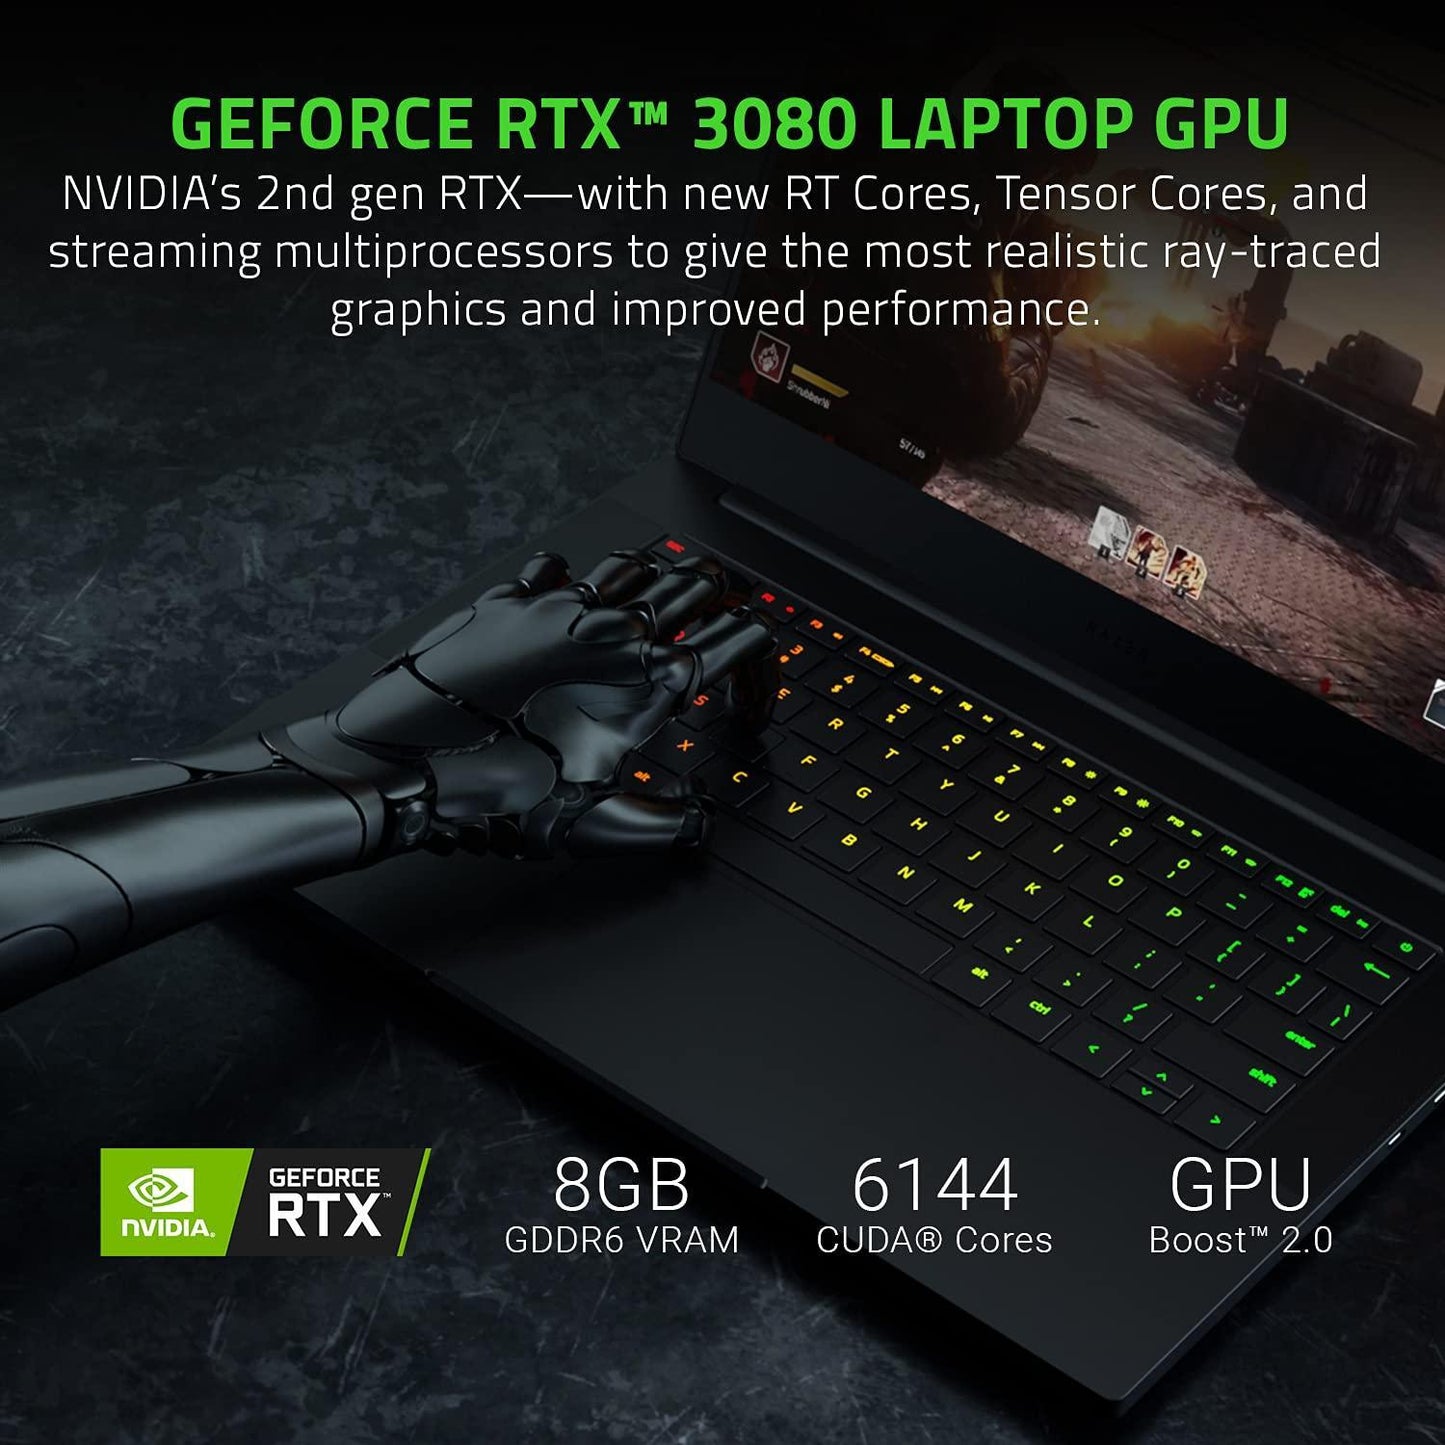 Razer Blade 14 Gaming Laptop: AMD Ryzen 9 5900HX 8 Core - CNC Aluminum - Chroma RGB - THX Spatial Audio - Vapor Chamber Cooling - Store For Gamers